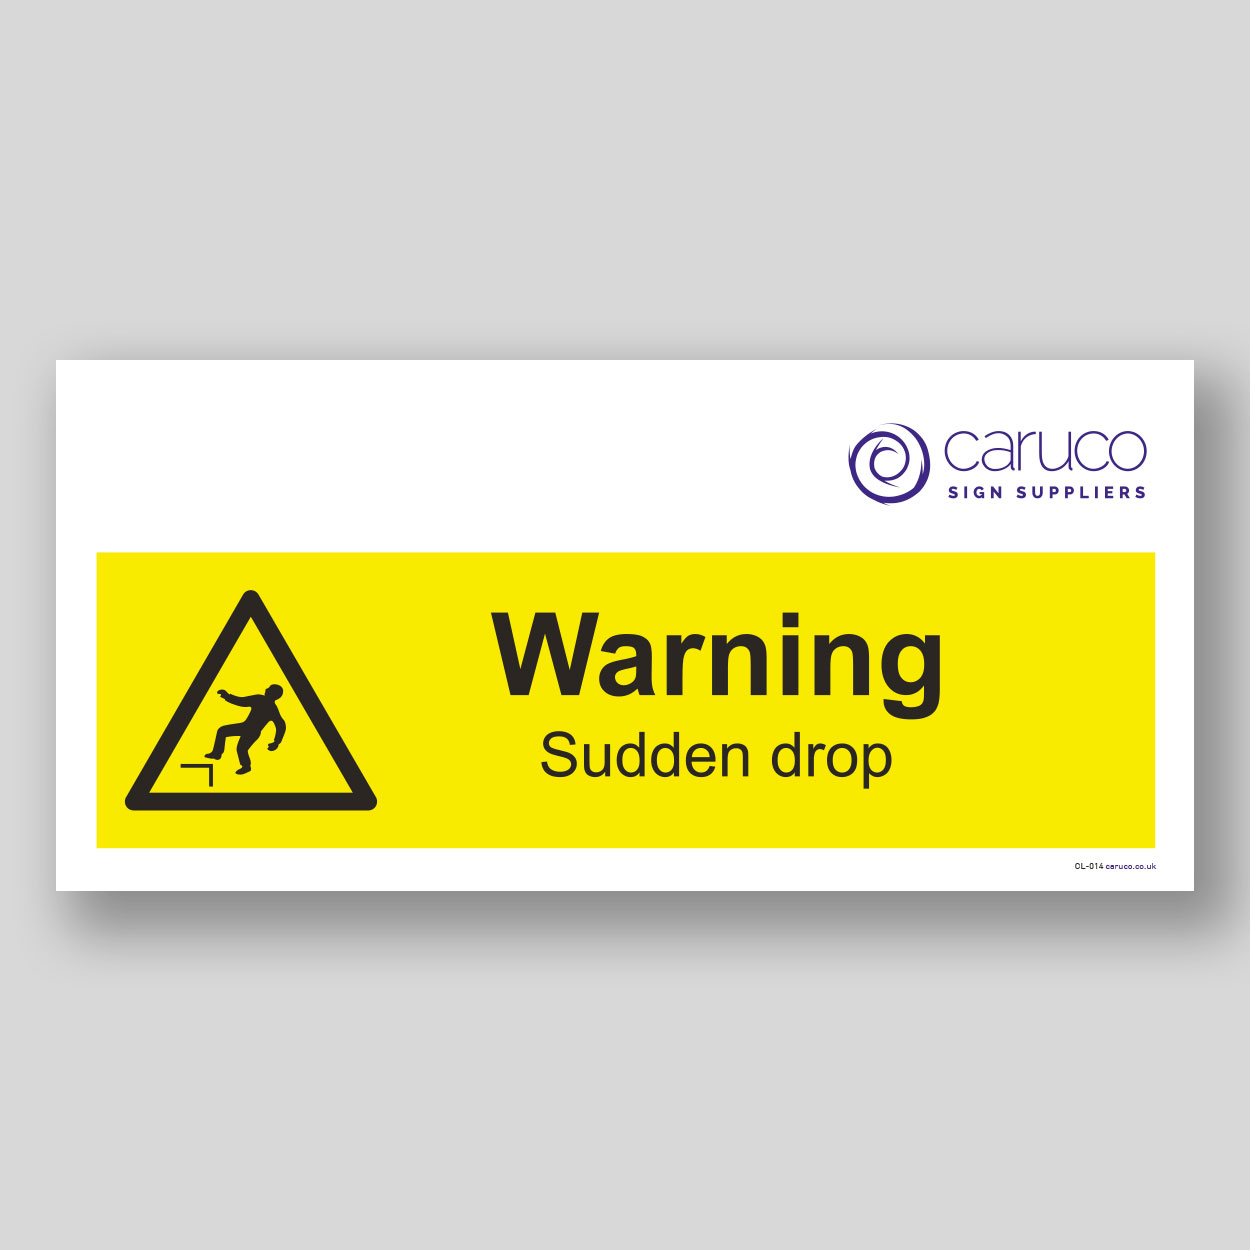 CL-014 Warning - sudden drop